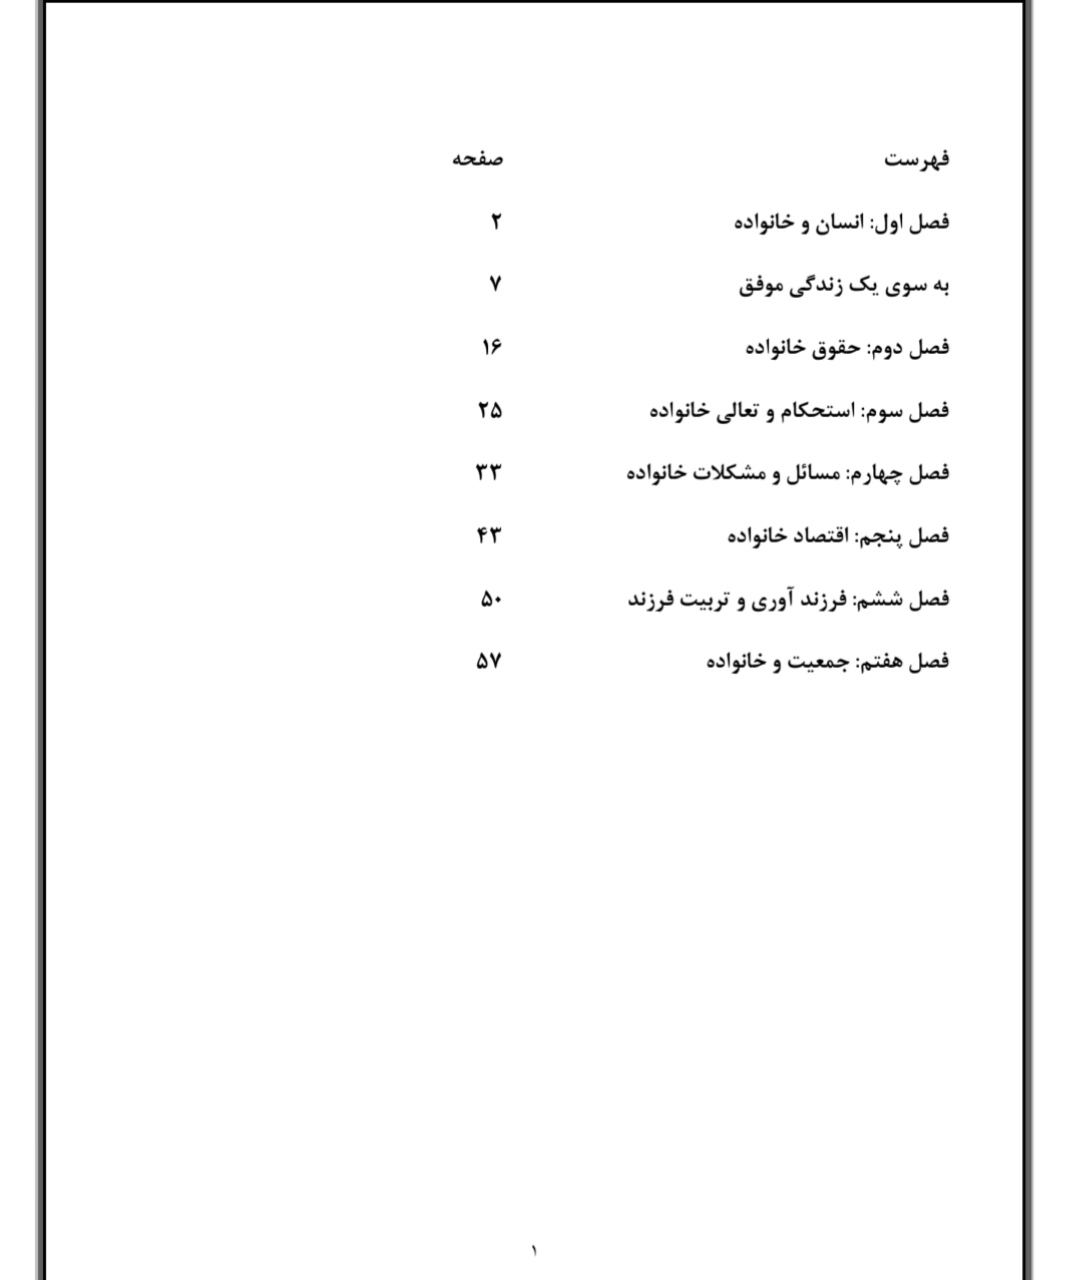 PDF  جزوه کامل کتاب اخلاق خانواده  زهرا آیت اللهی و جمعی از نویسندگان در60 صفحه